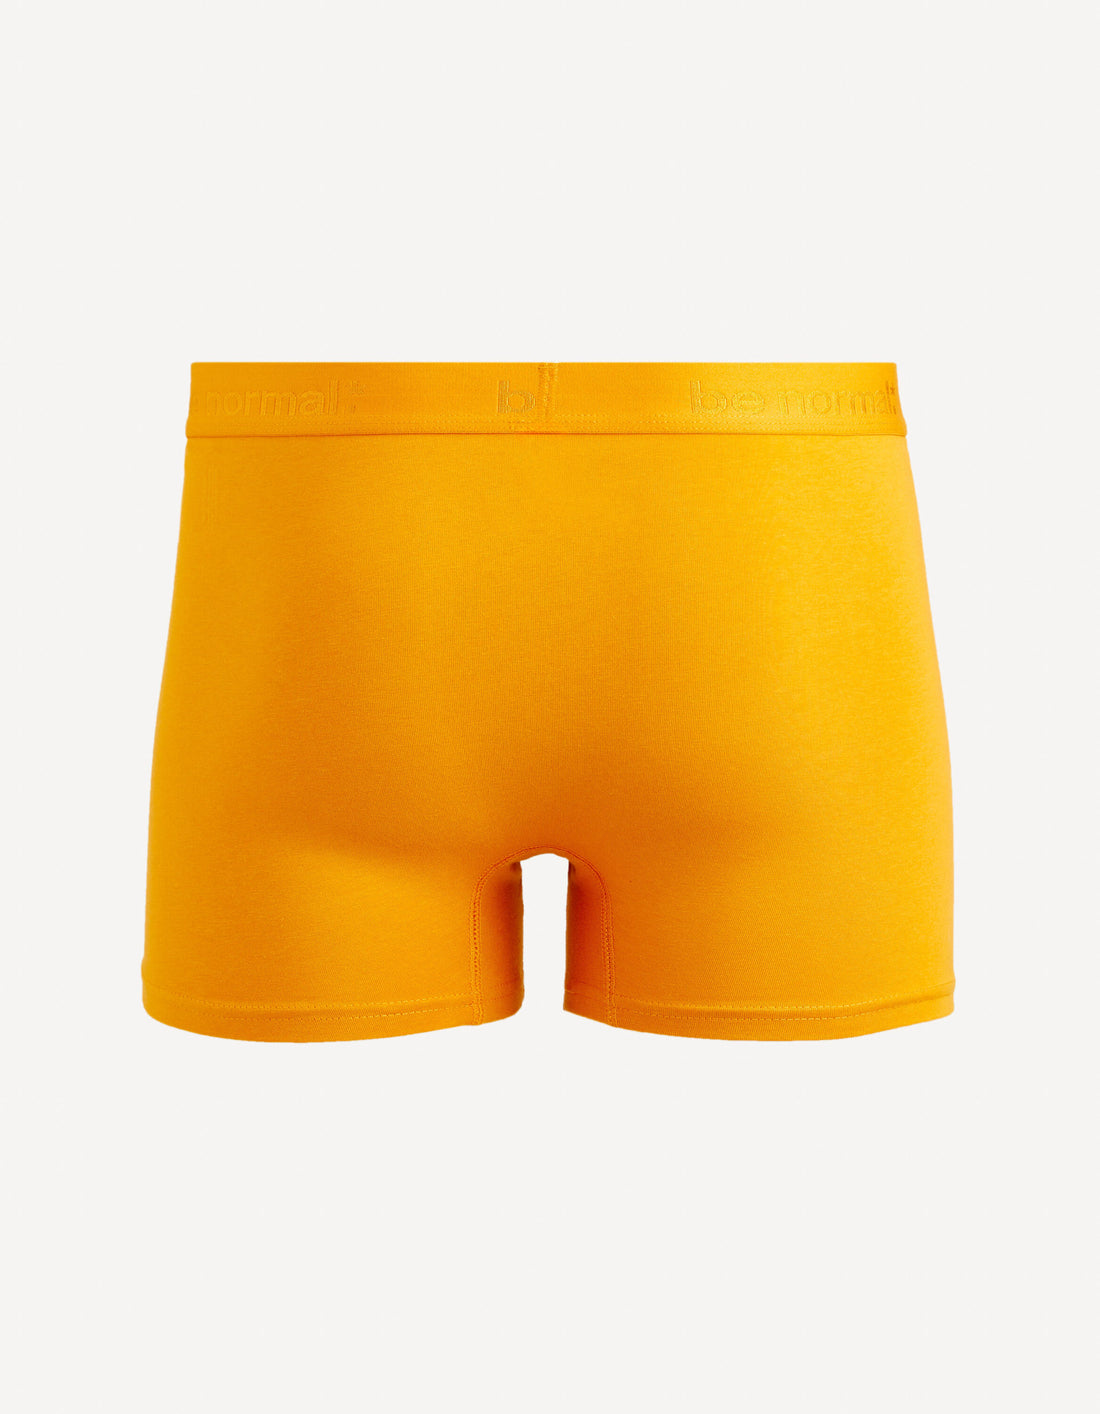 Stretch Cotton Boxer Shorts - Yellow_BINORMAL_SUN YELLOW 01_02